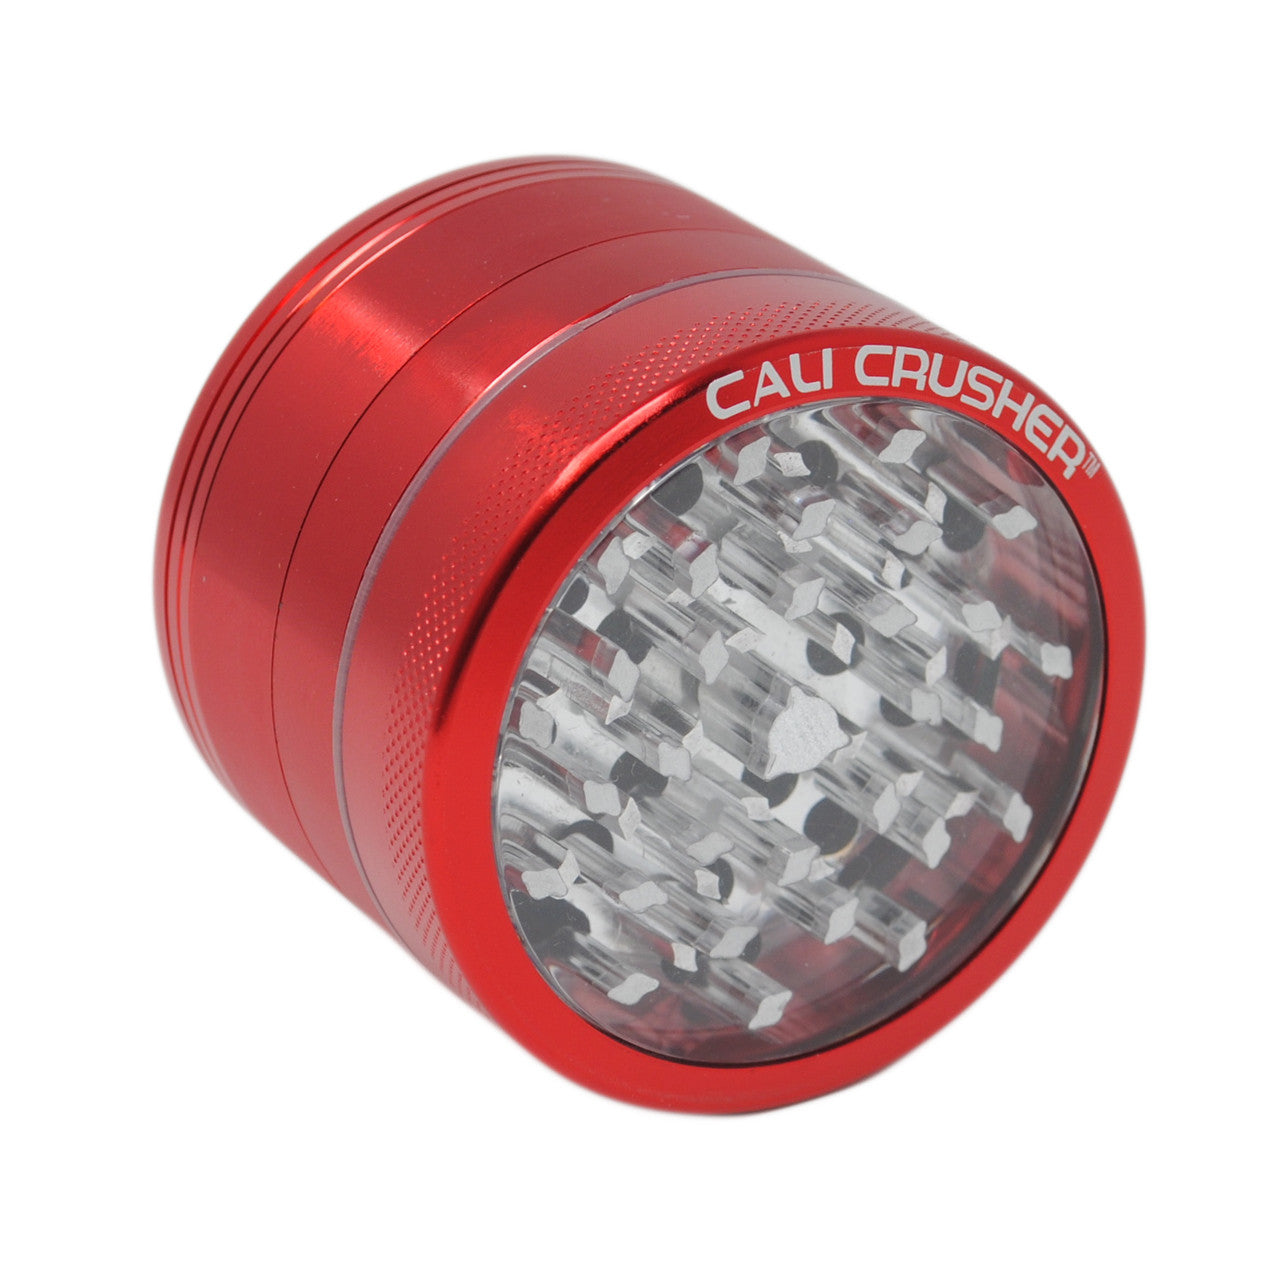 Cali Crusher OG 2.5 Inch Clear Top Grinder - Red